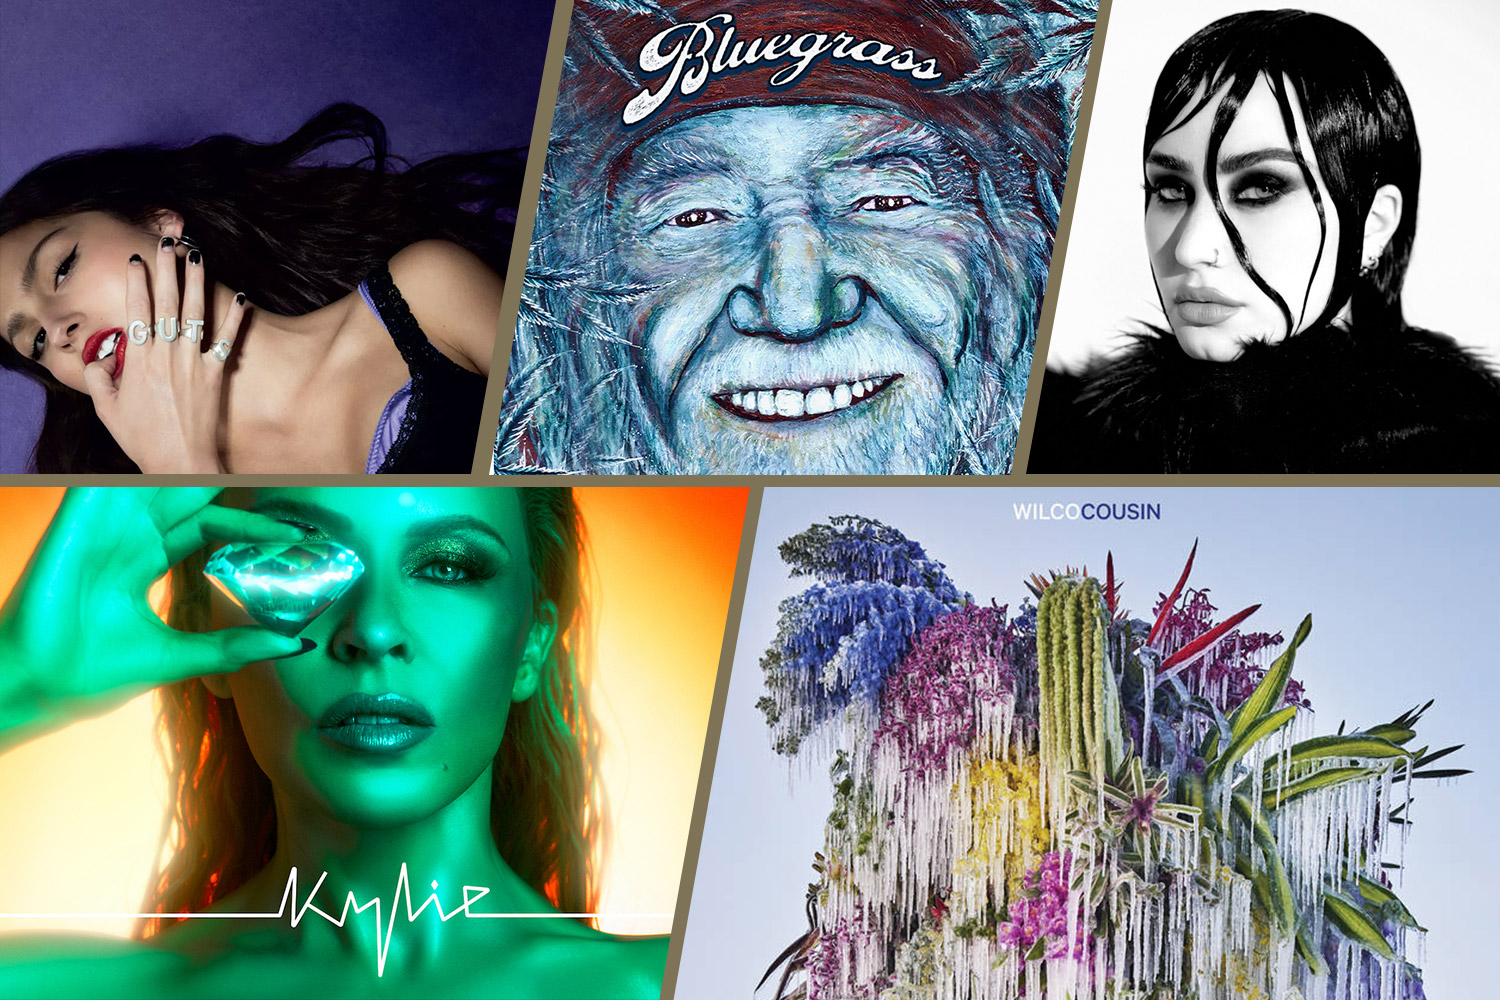 Collage of Olivia Rodrigo’s album Guts, Willie Nelson’s album Bluegrass, Demi Lovato’s album REVAMPED, Kylie Minogue’s album Tension, and Wilco’s album Cousin